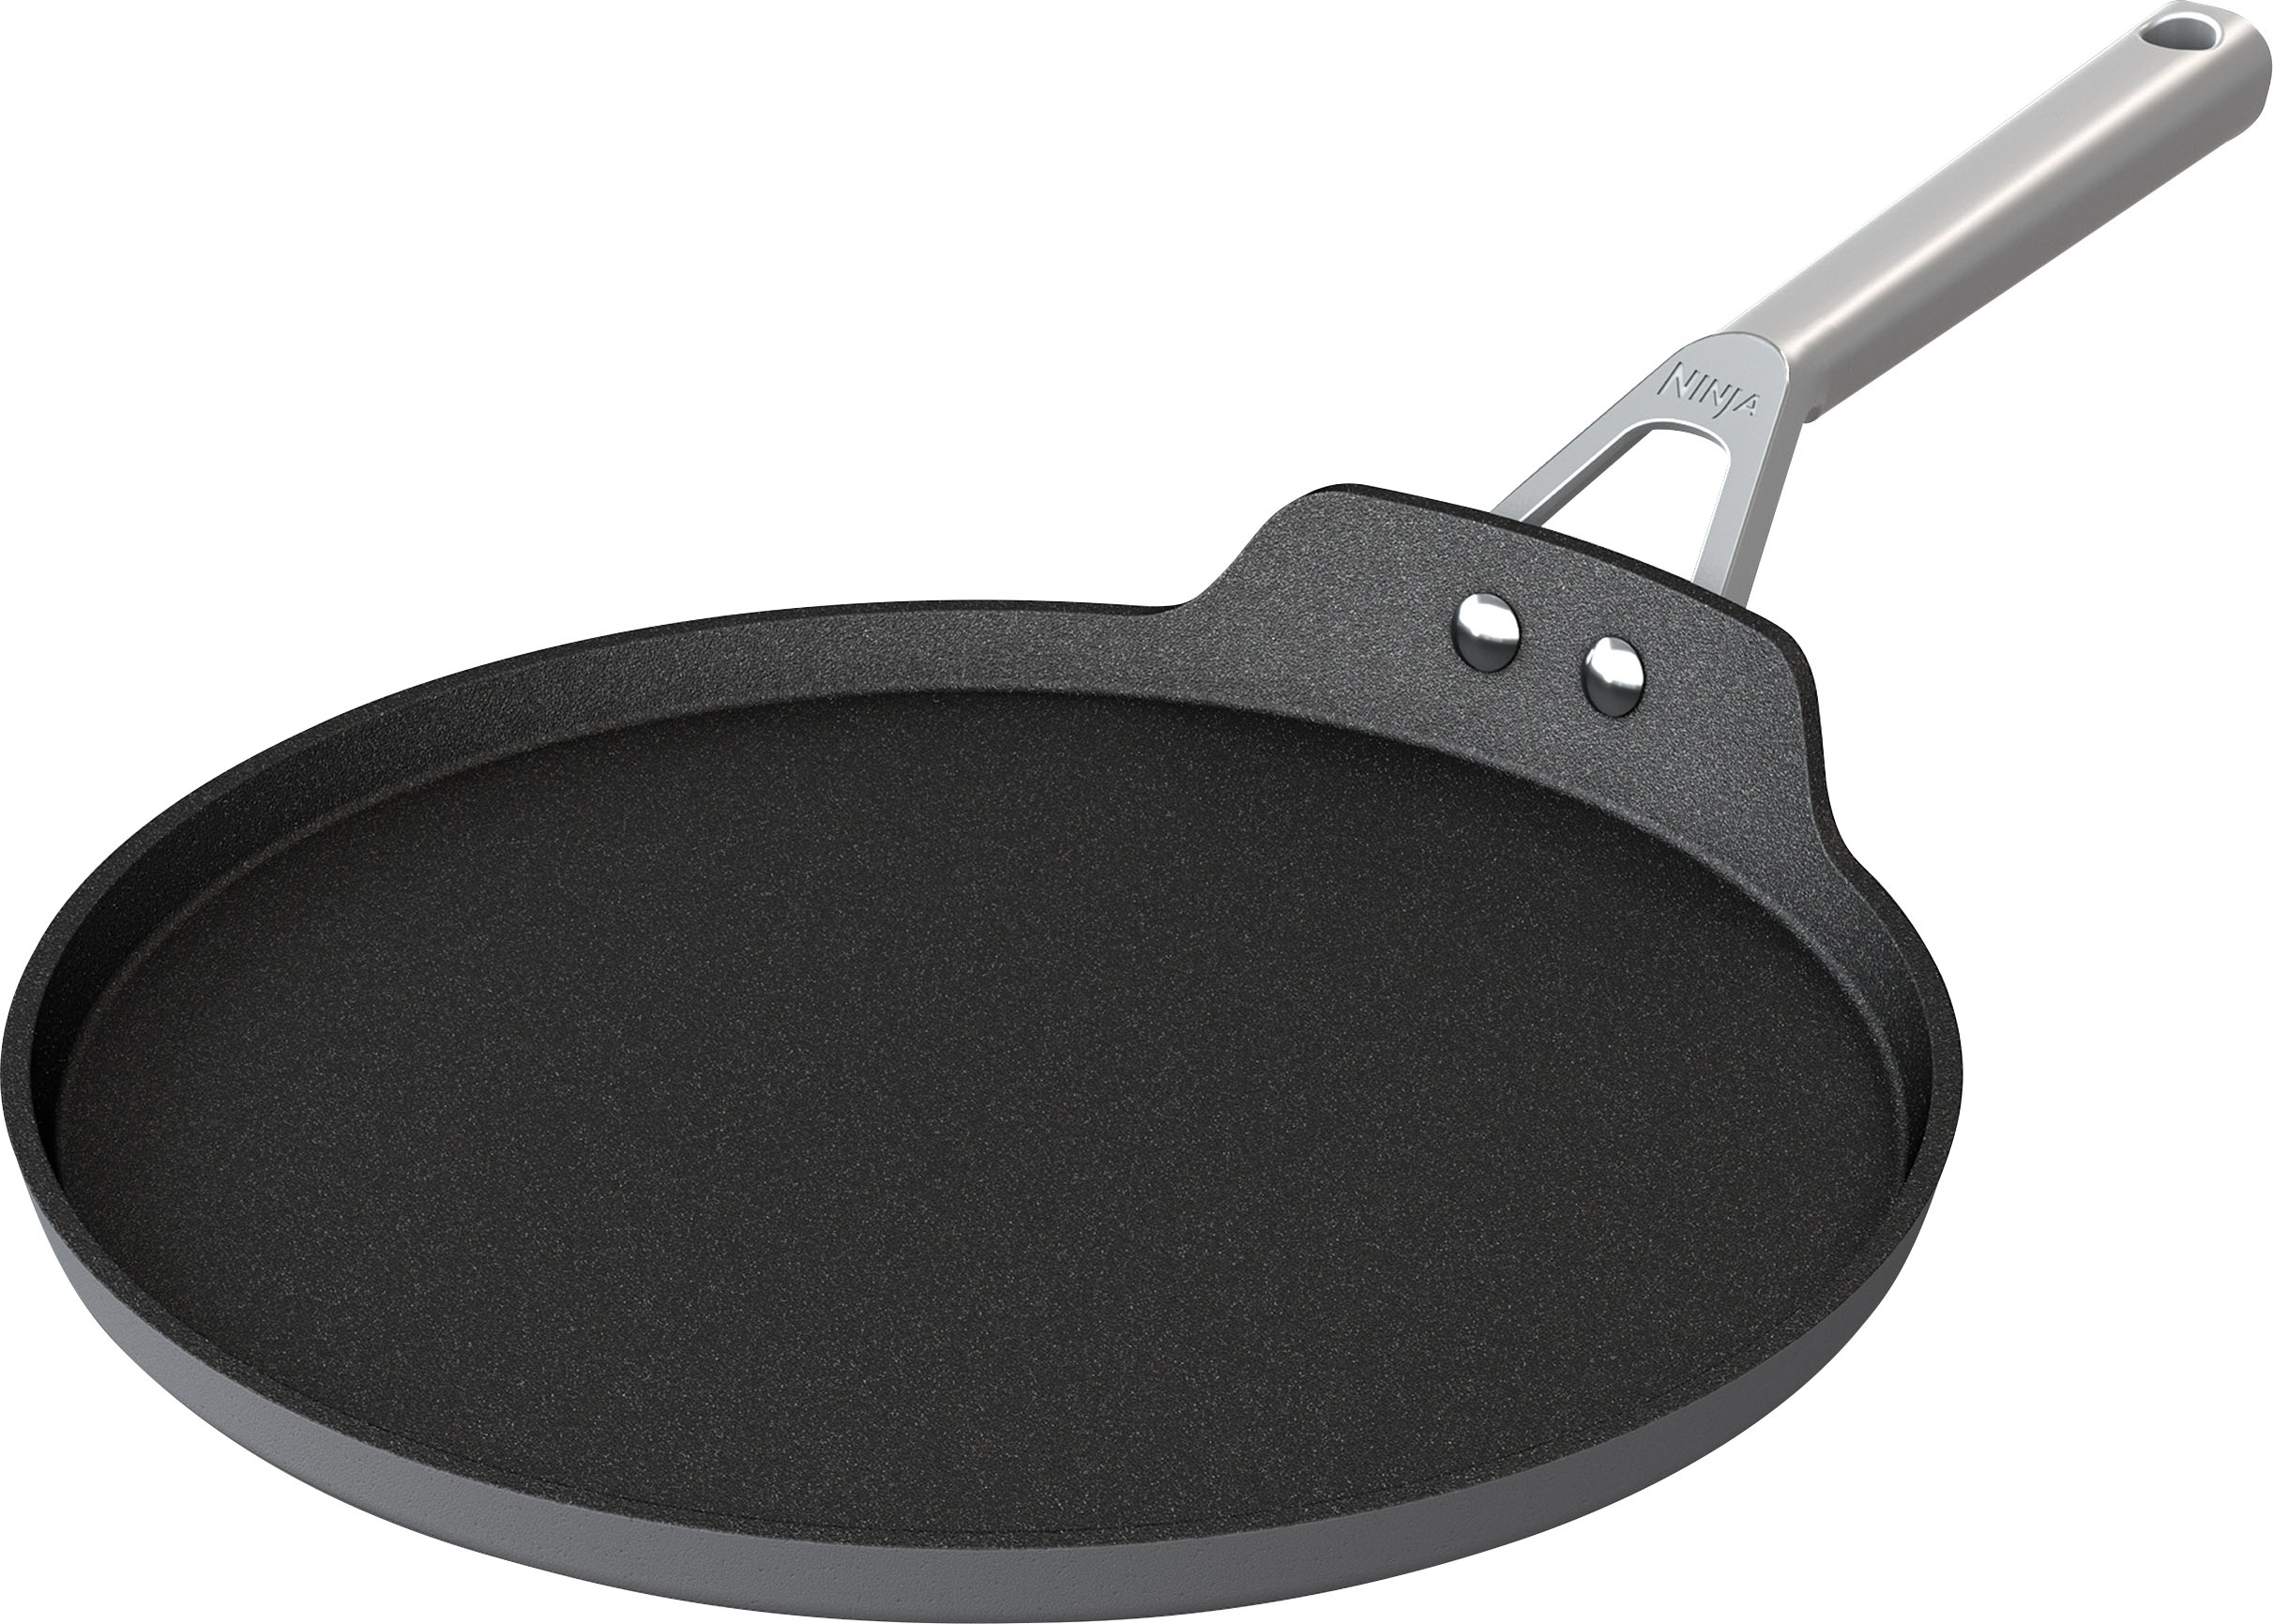 Angle View: Ninja - Foodi NeverStick Premium Hard-Anodized 12-Inch Round Griddle Pan - Grey